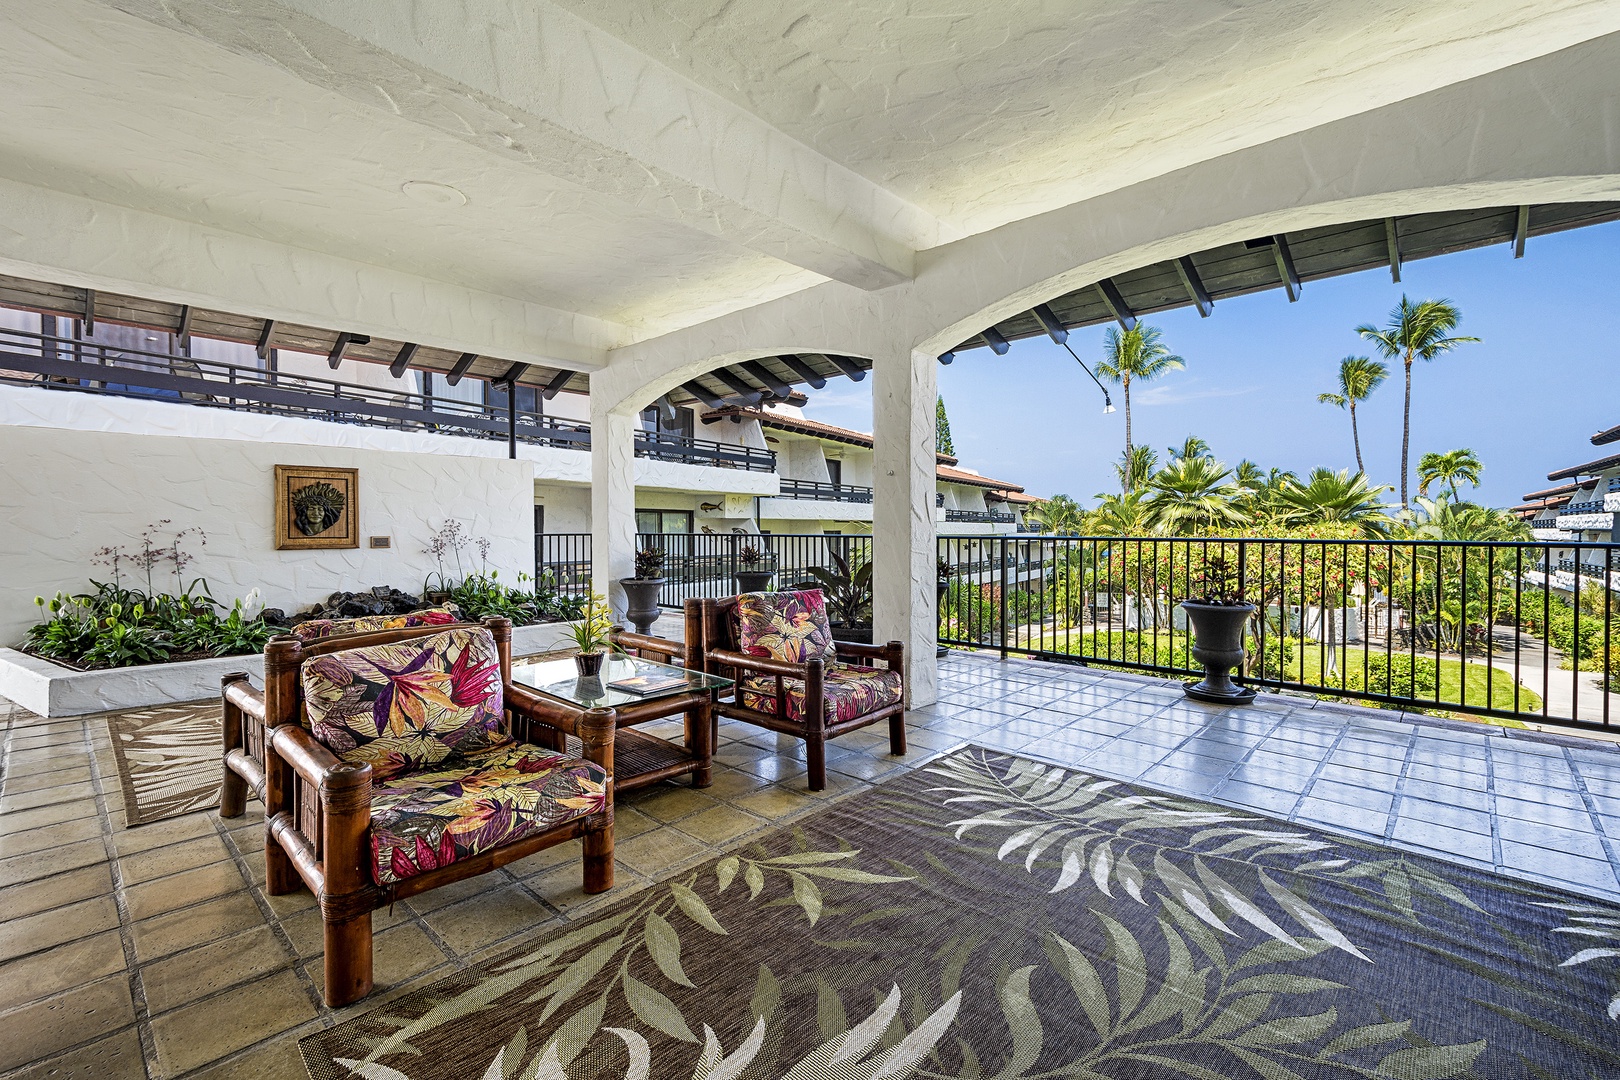 Kailua Kona Vacation Rentals, Casa De Emdeko 222 - Casa De Emdeko shaded seating area at the entrance to the complex